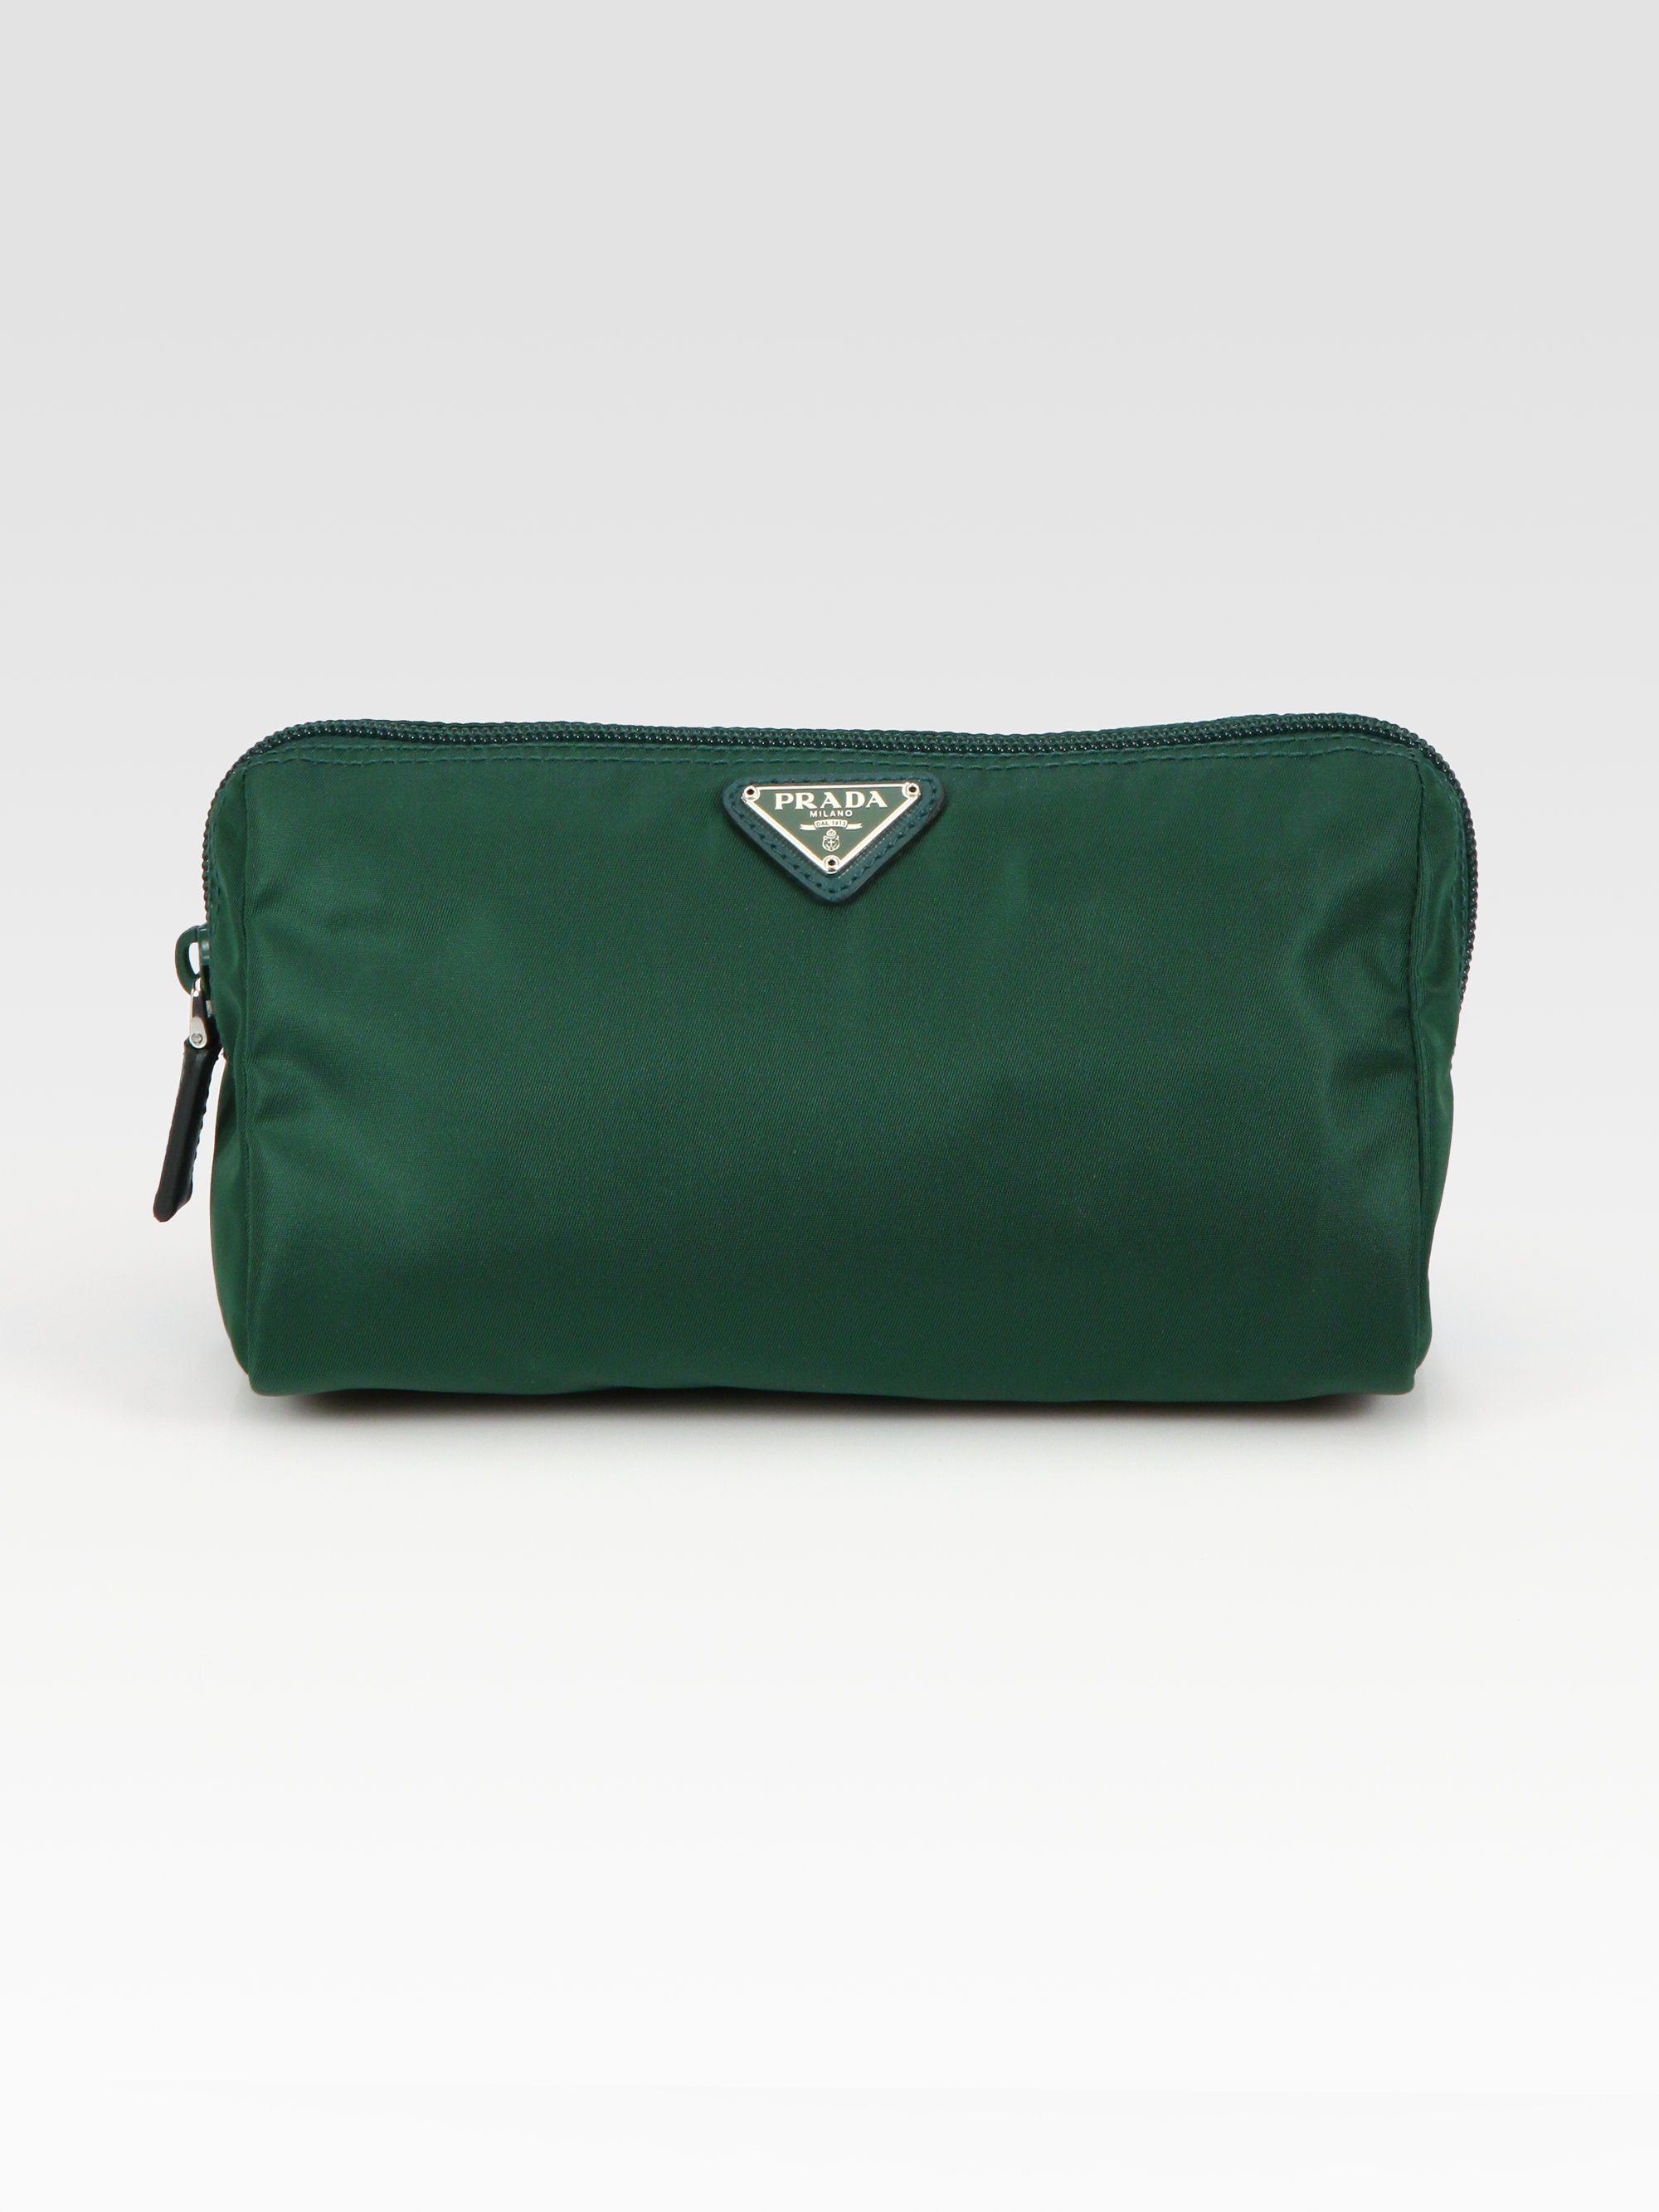 Prada Nylon Triangle Cosmetic Bag in Green (emerald) | Lyst  